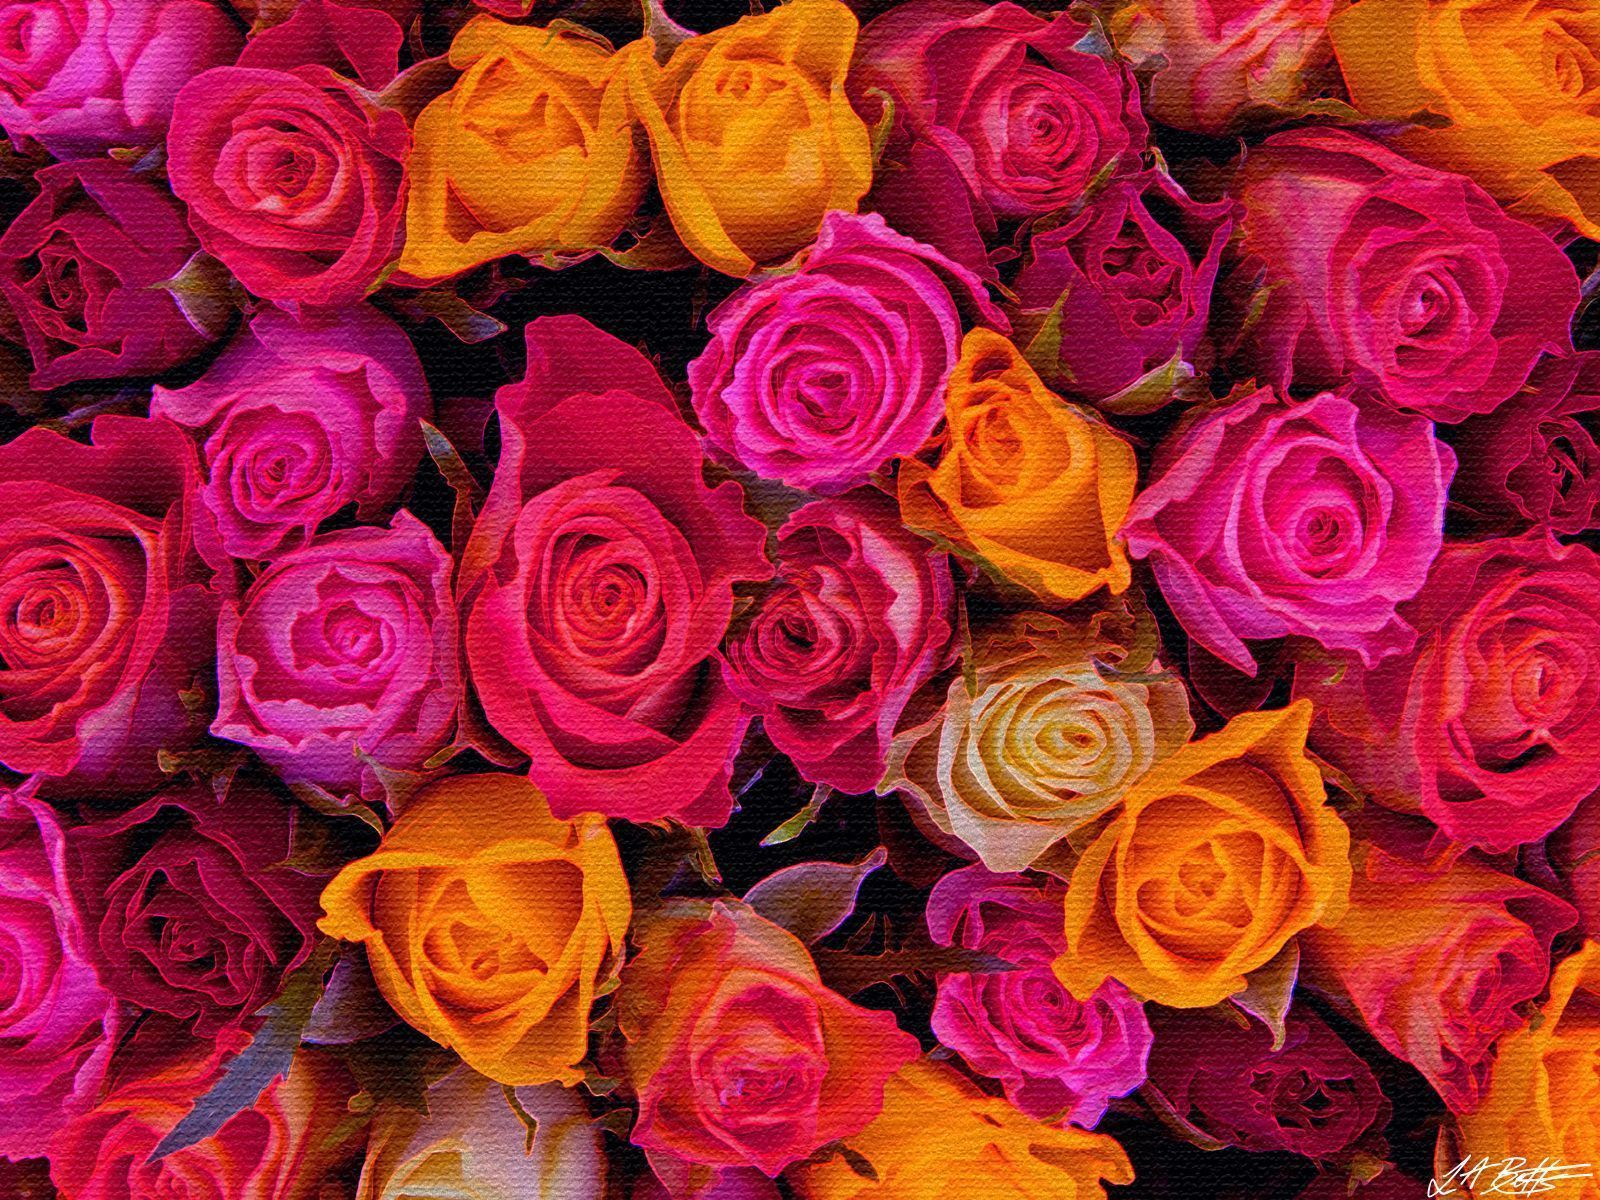 1600x1200 Full Screen “Roses” Wallpaper by L A Betts - Leone ...